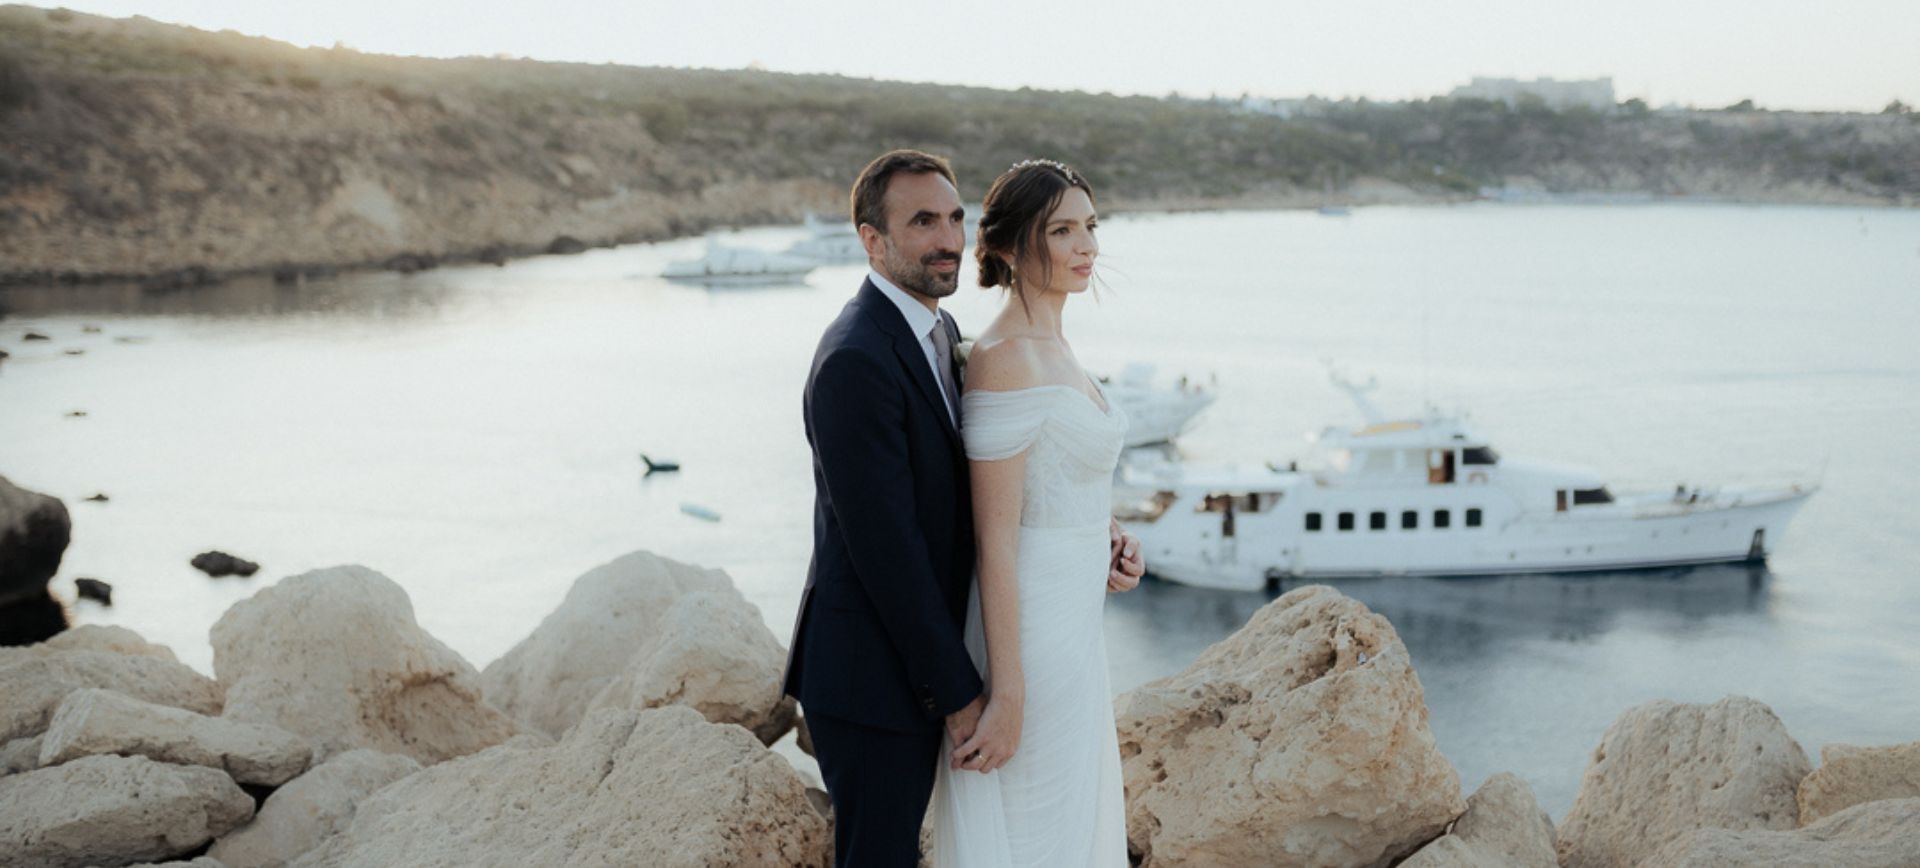 Elope in Cyprus Wedding Elopement by the Mediterranean Sea 2